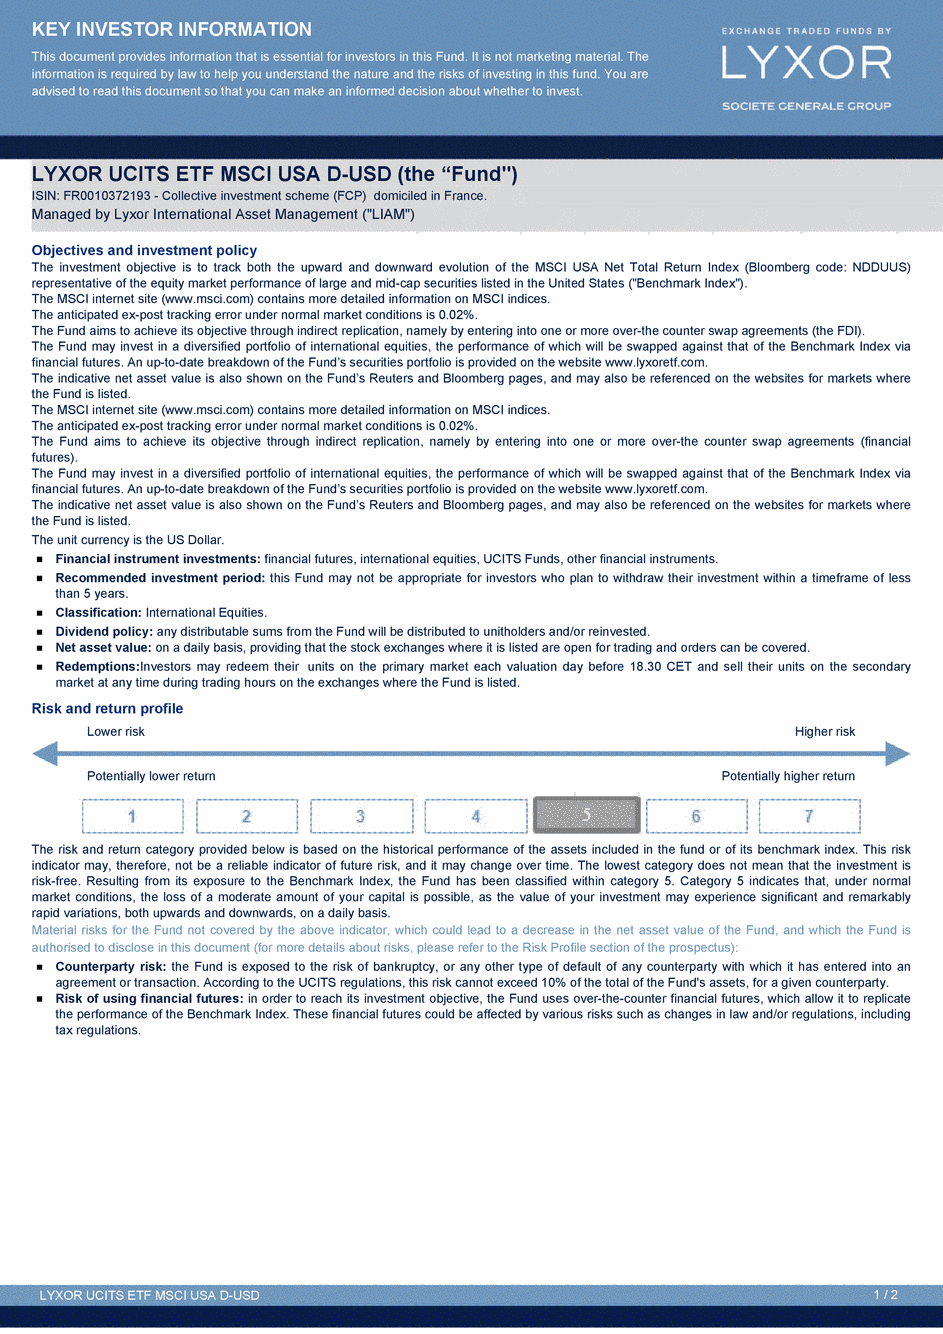 DICI LYXOR UCITS ETF MSCI USA D-USD - 28/08/2015 - Anglais